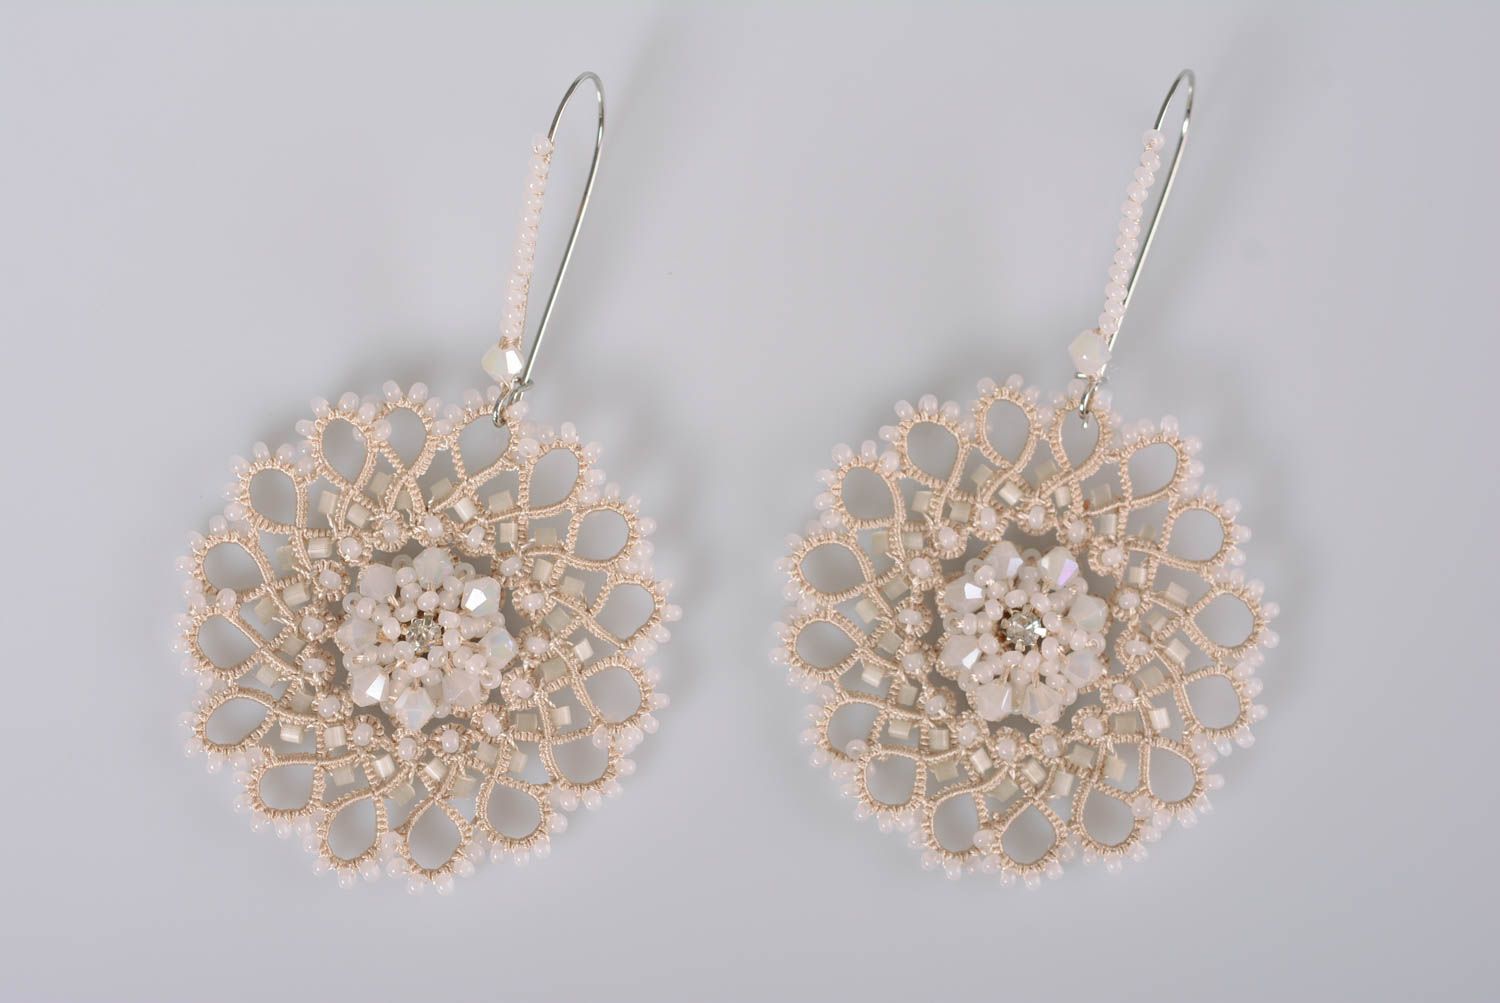 Handmade earrings fashion jewelry earrings for women designer accessories photo 4